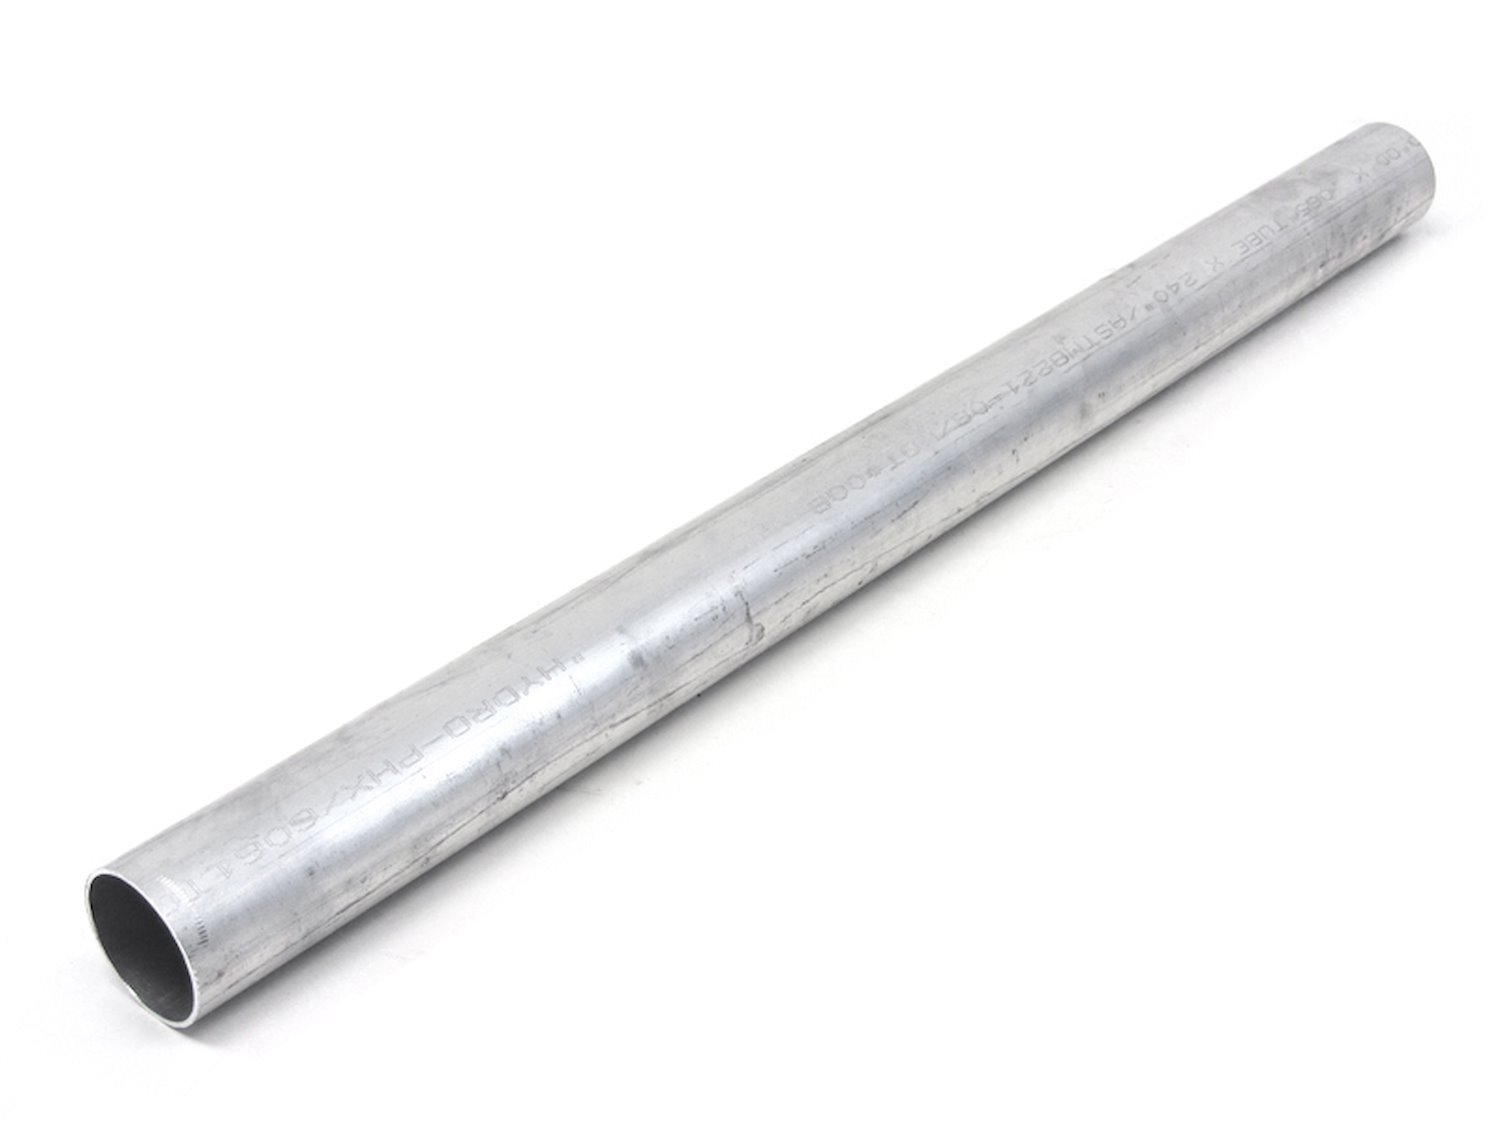 AST-2F-025 Aluminum Tubing, 6061 Aluminum, Straight Tubing, 1/4 in. OD, Seamless, Raw Finish, 2 ft. Long